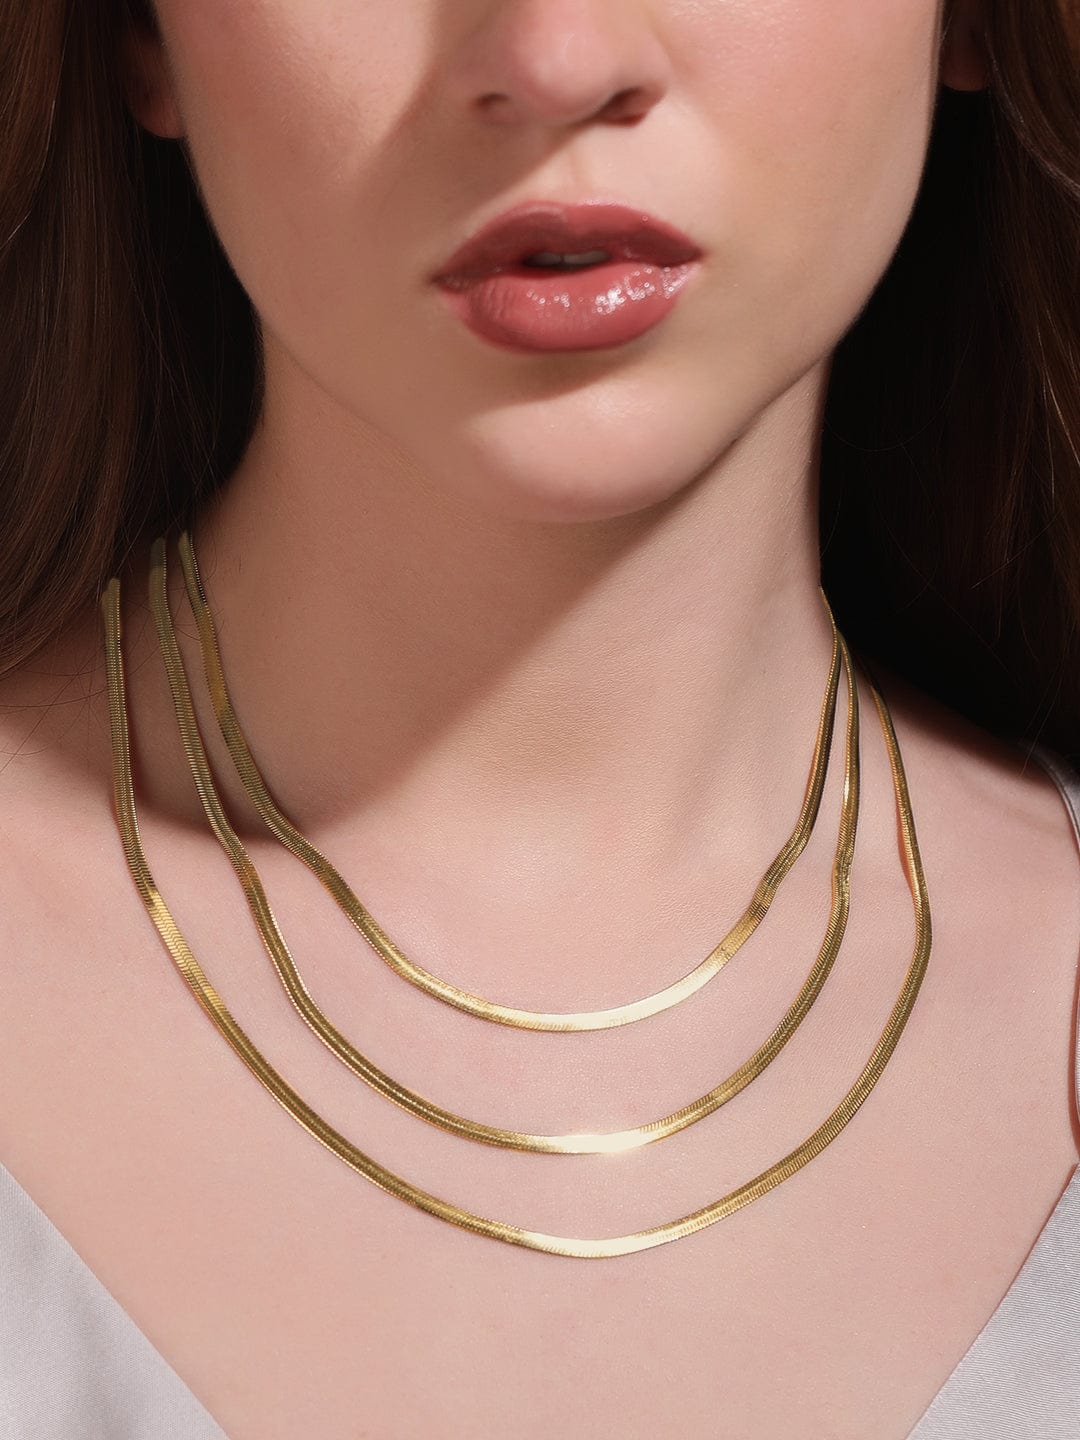 Rubans Voguish Glamorous Cascade Stainless Gold Tone Multi-Layer Necklace Necklace